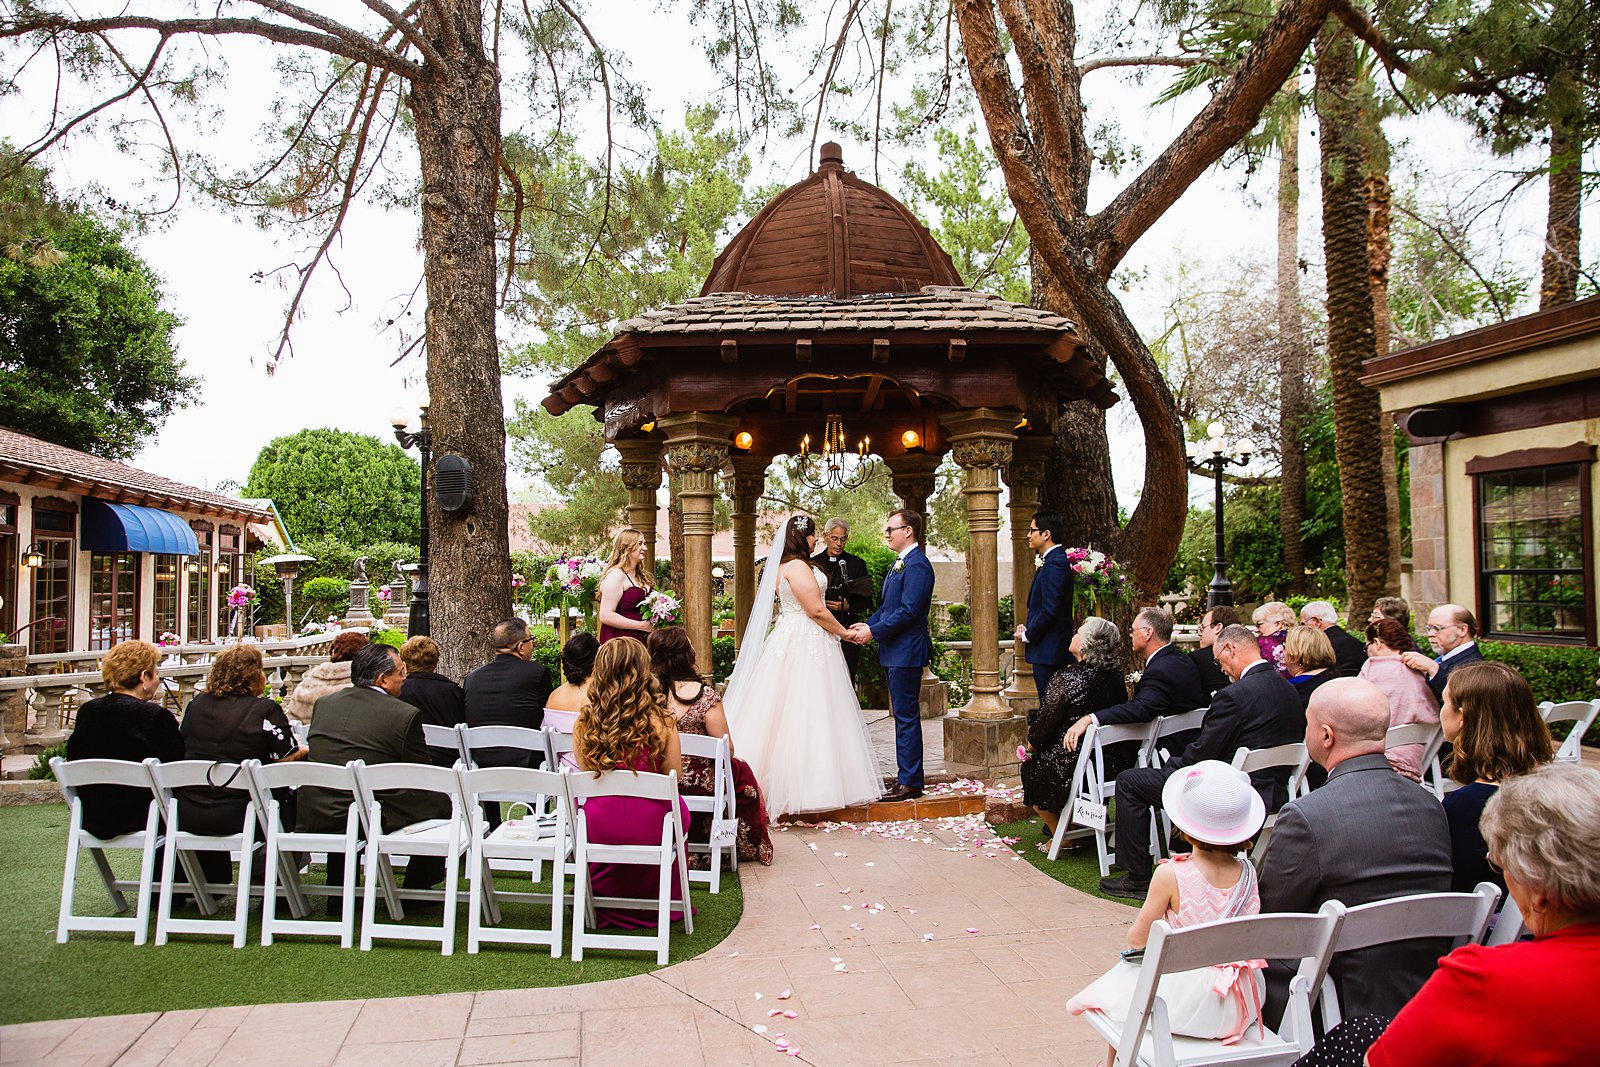 Wedding ceremony at The Wright House Provencal by Phoenix wedding photographer PMA Photography.